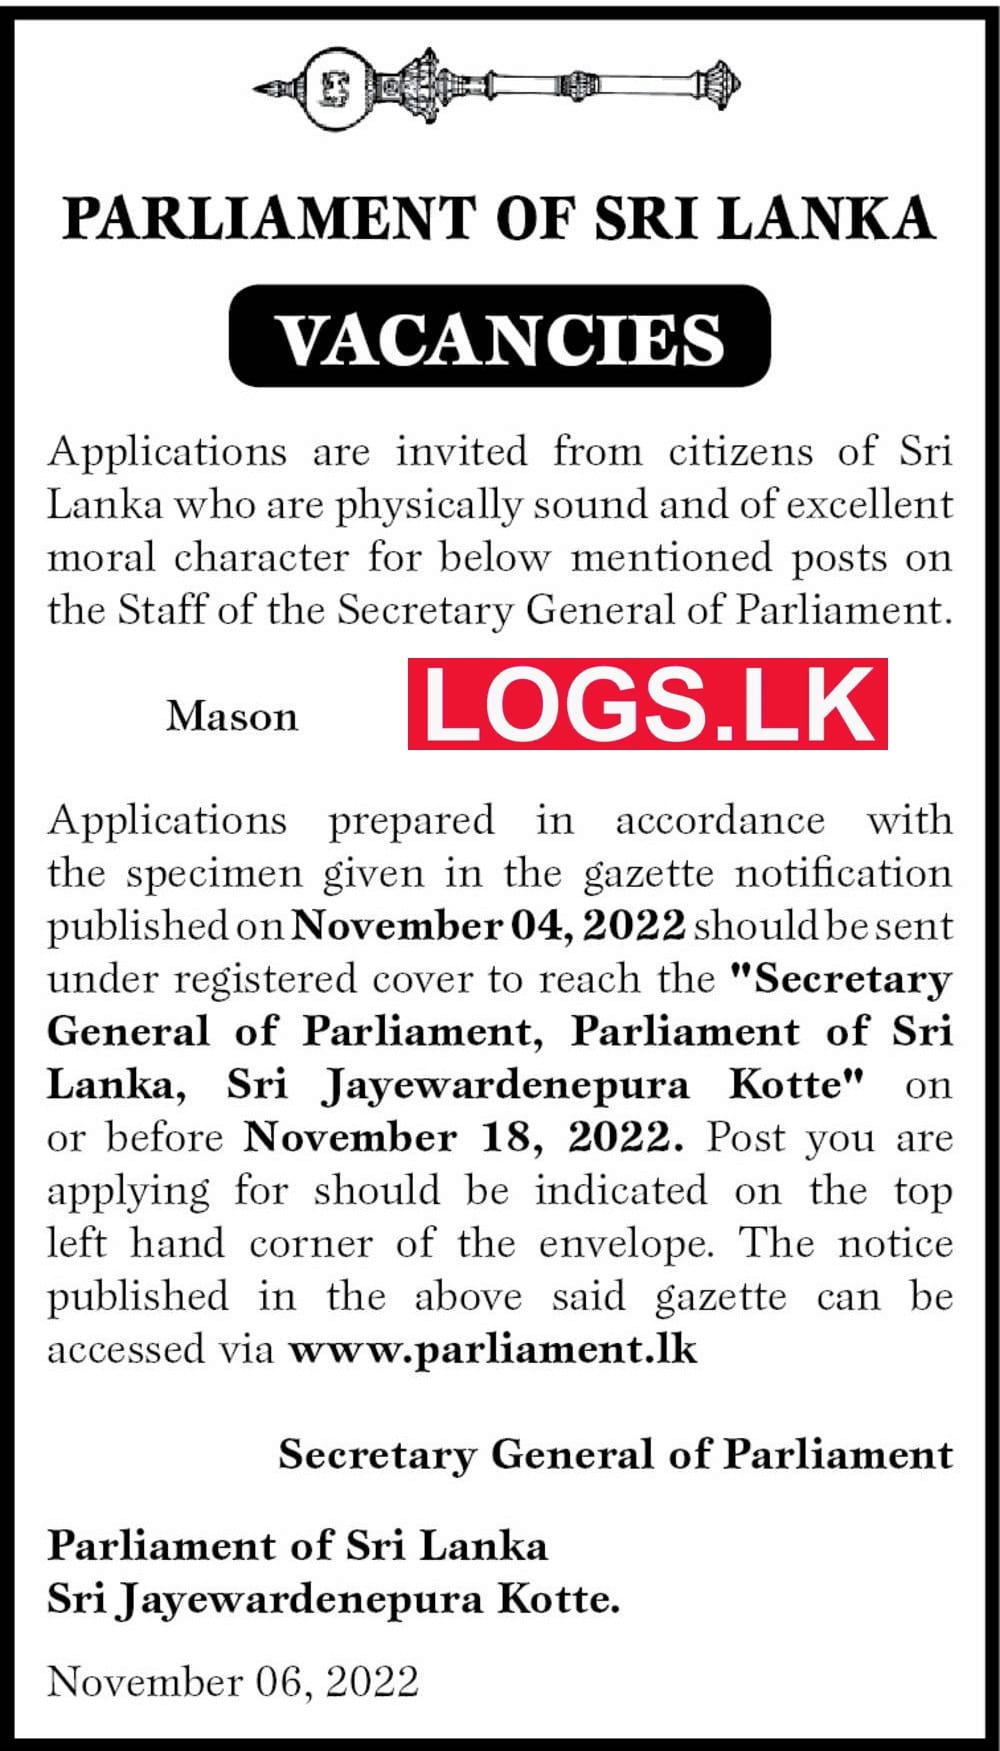 Mason Job Vacancy in Sri Lanka Parliament Jobs Vacancies Details Download in Sinhala tamil English